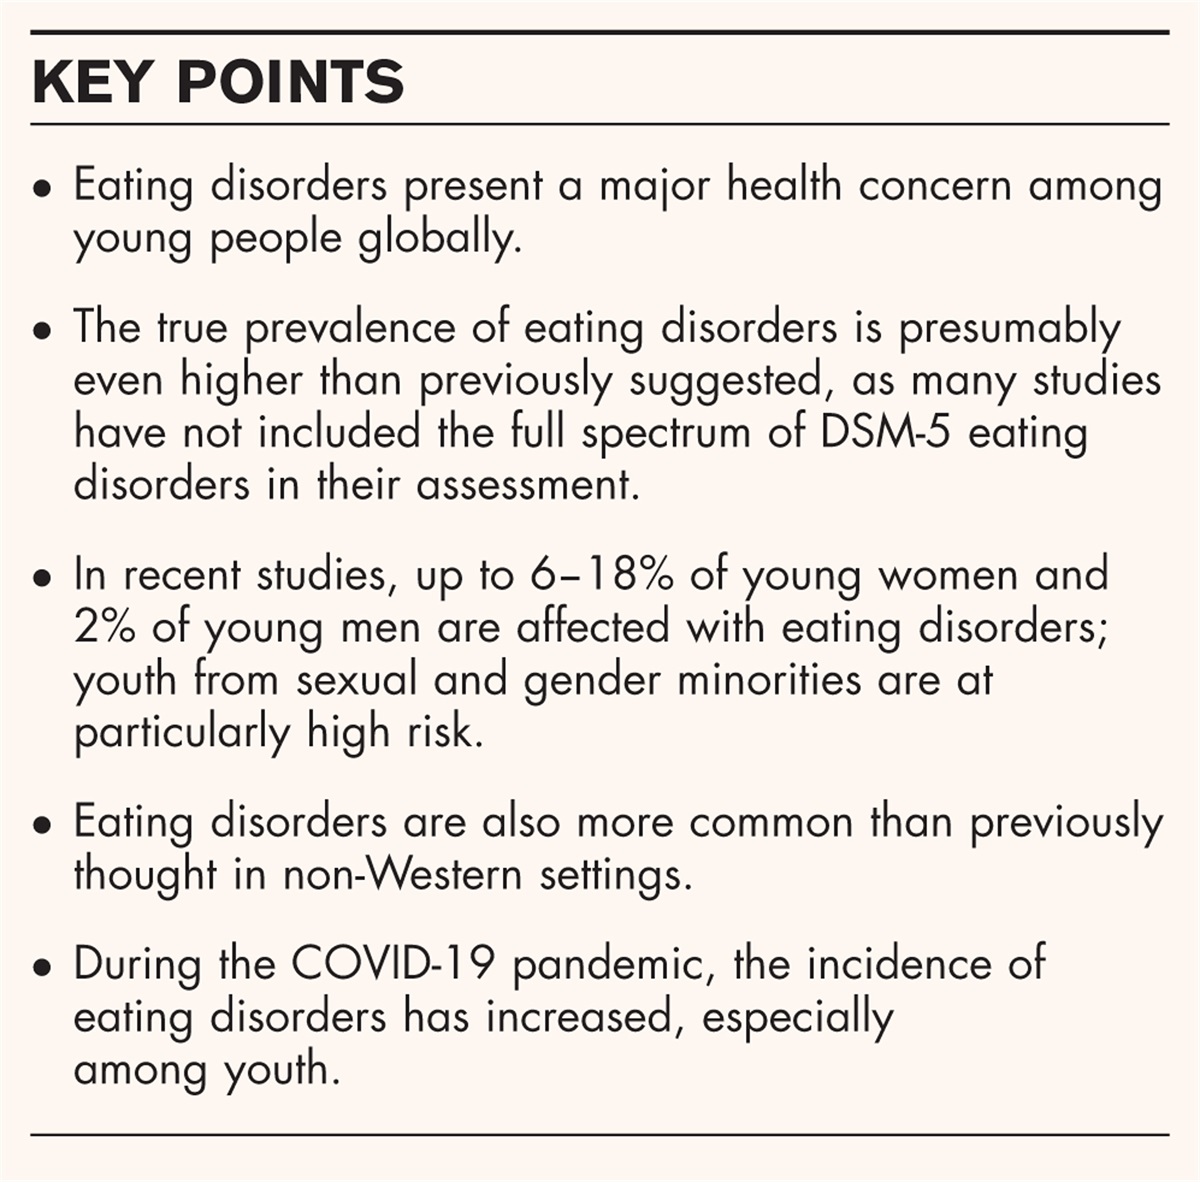 Worldwide prevalence of DSM-5 eating disorders among young people